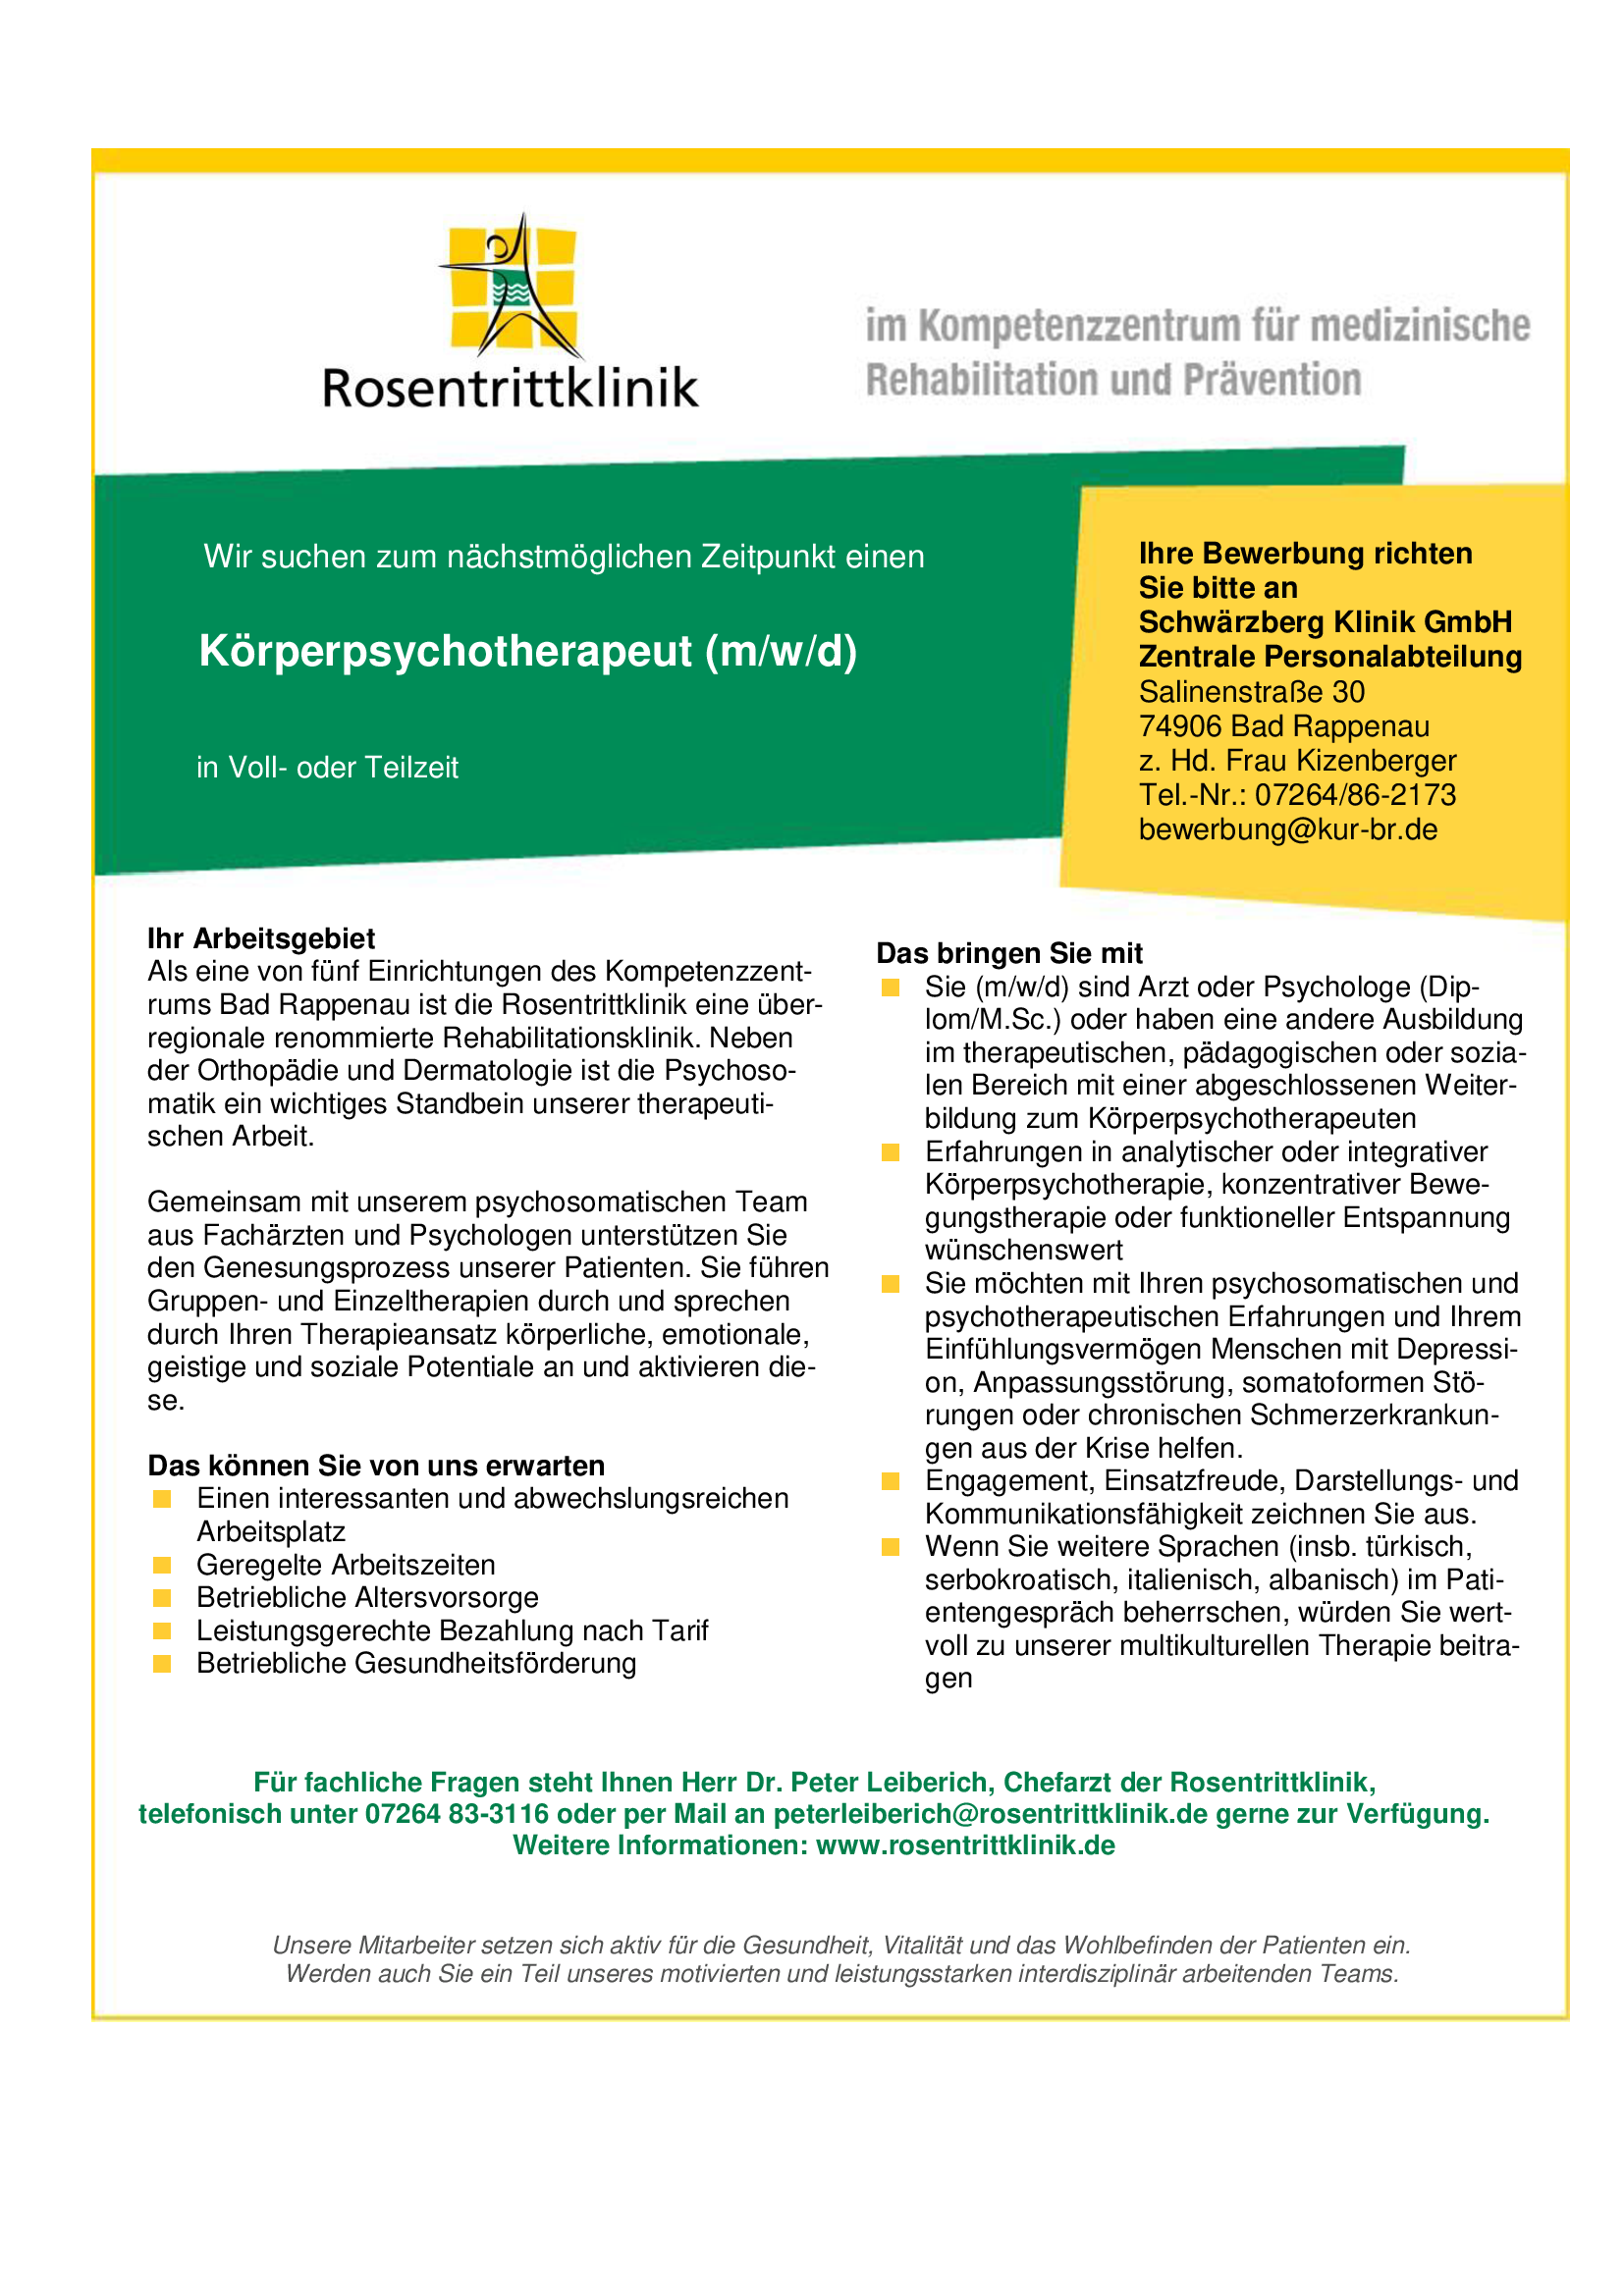 Rosentrittklinik Bad Rappenau: Körperpsychotherapeut (m/w/d)